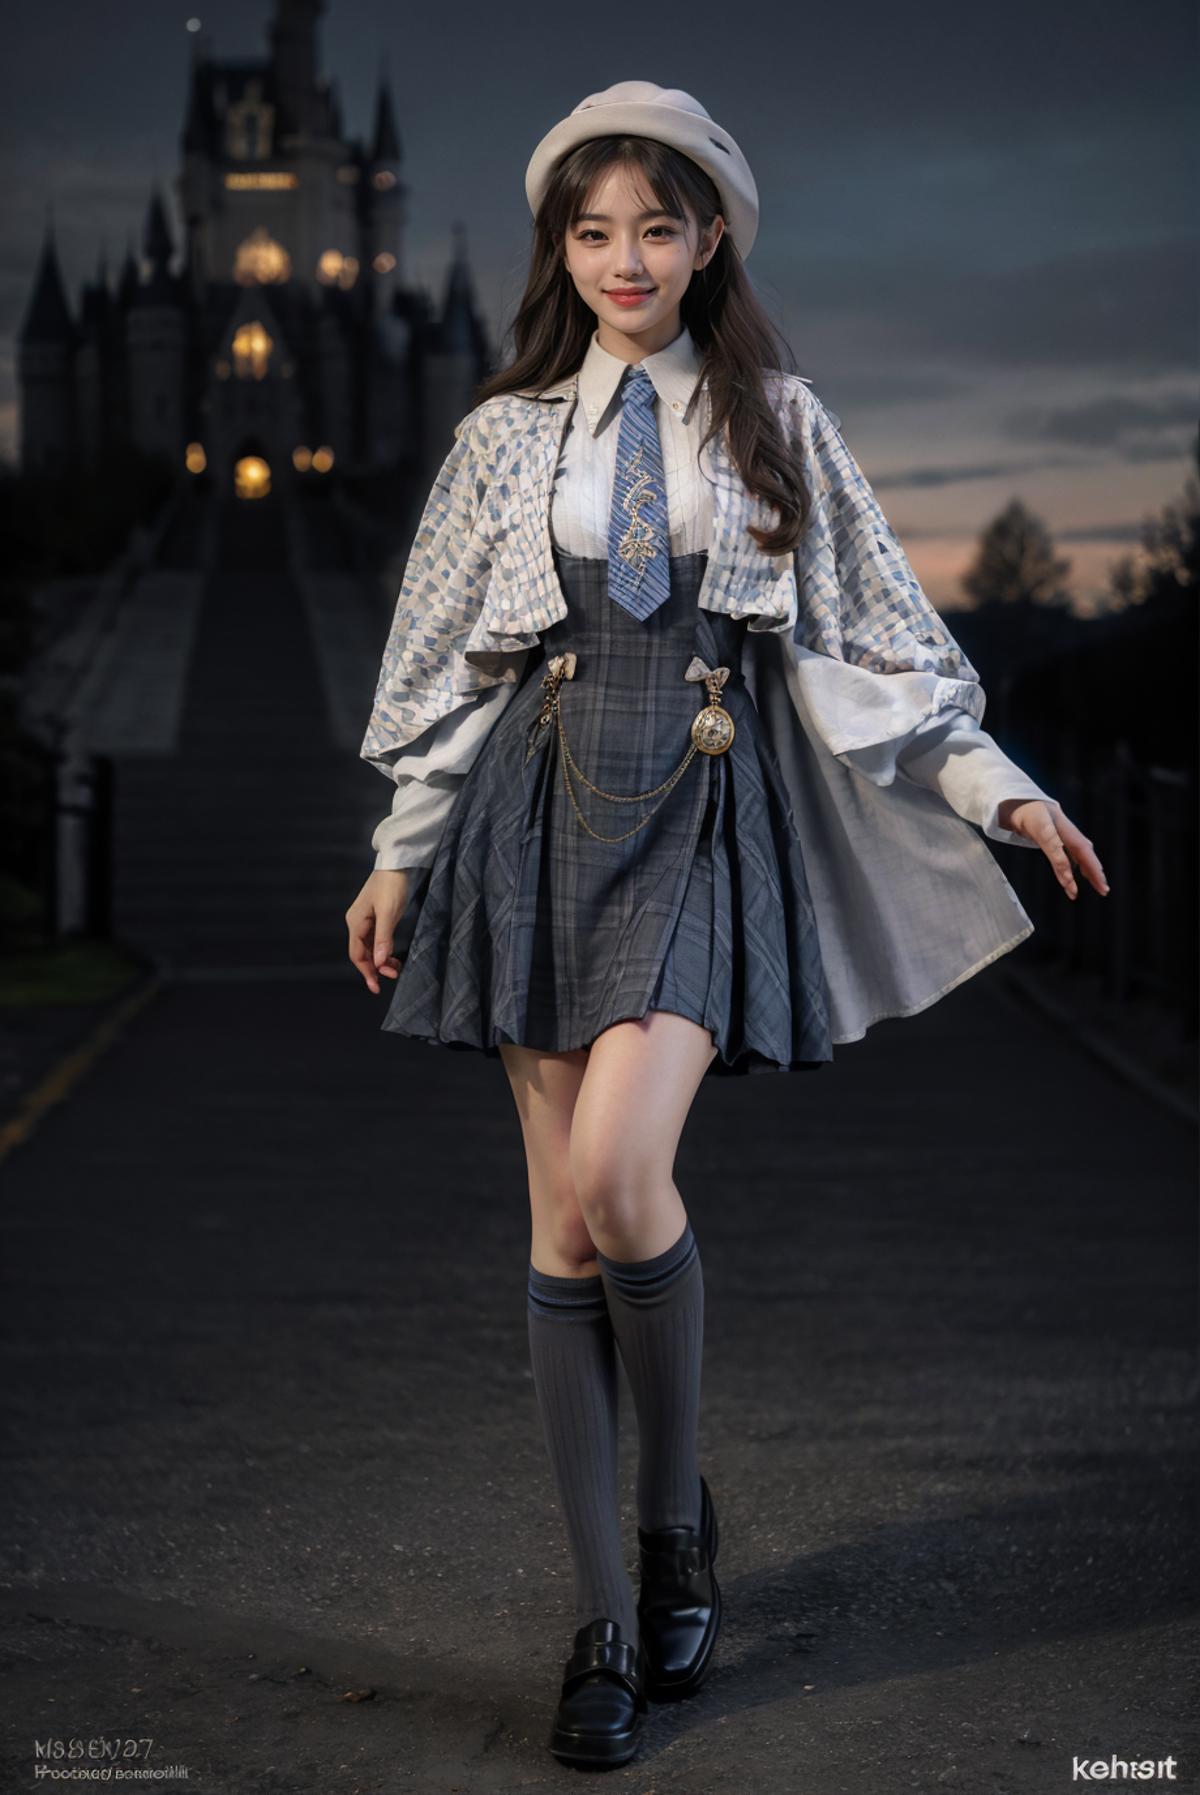 Magical girl costume | 魔法少女装  image by cyberAngel_